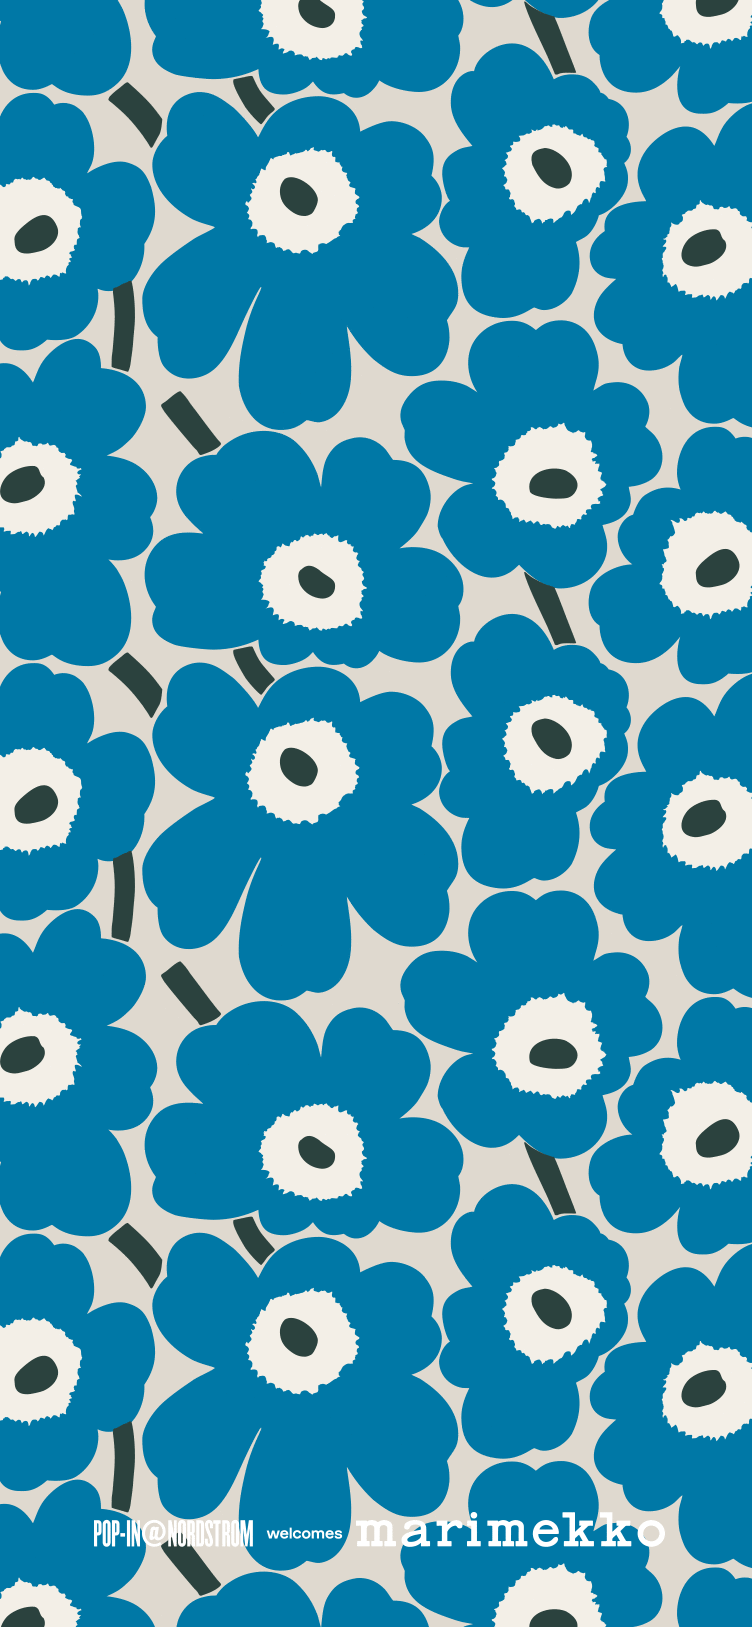 Marimekko's poppy pattern.